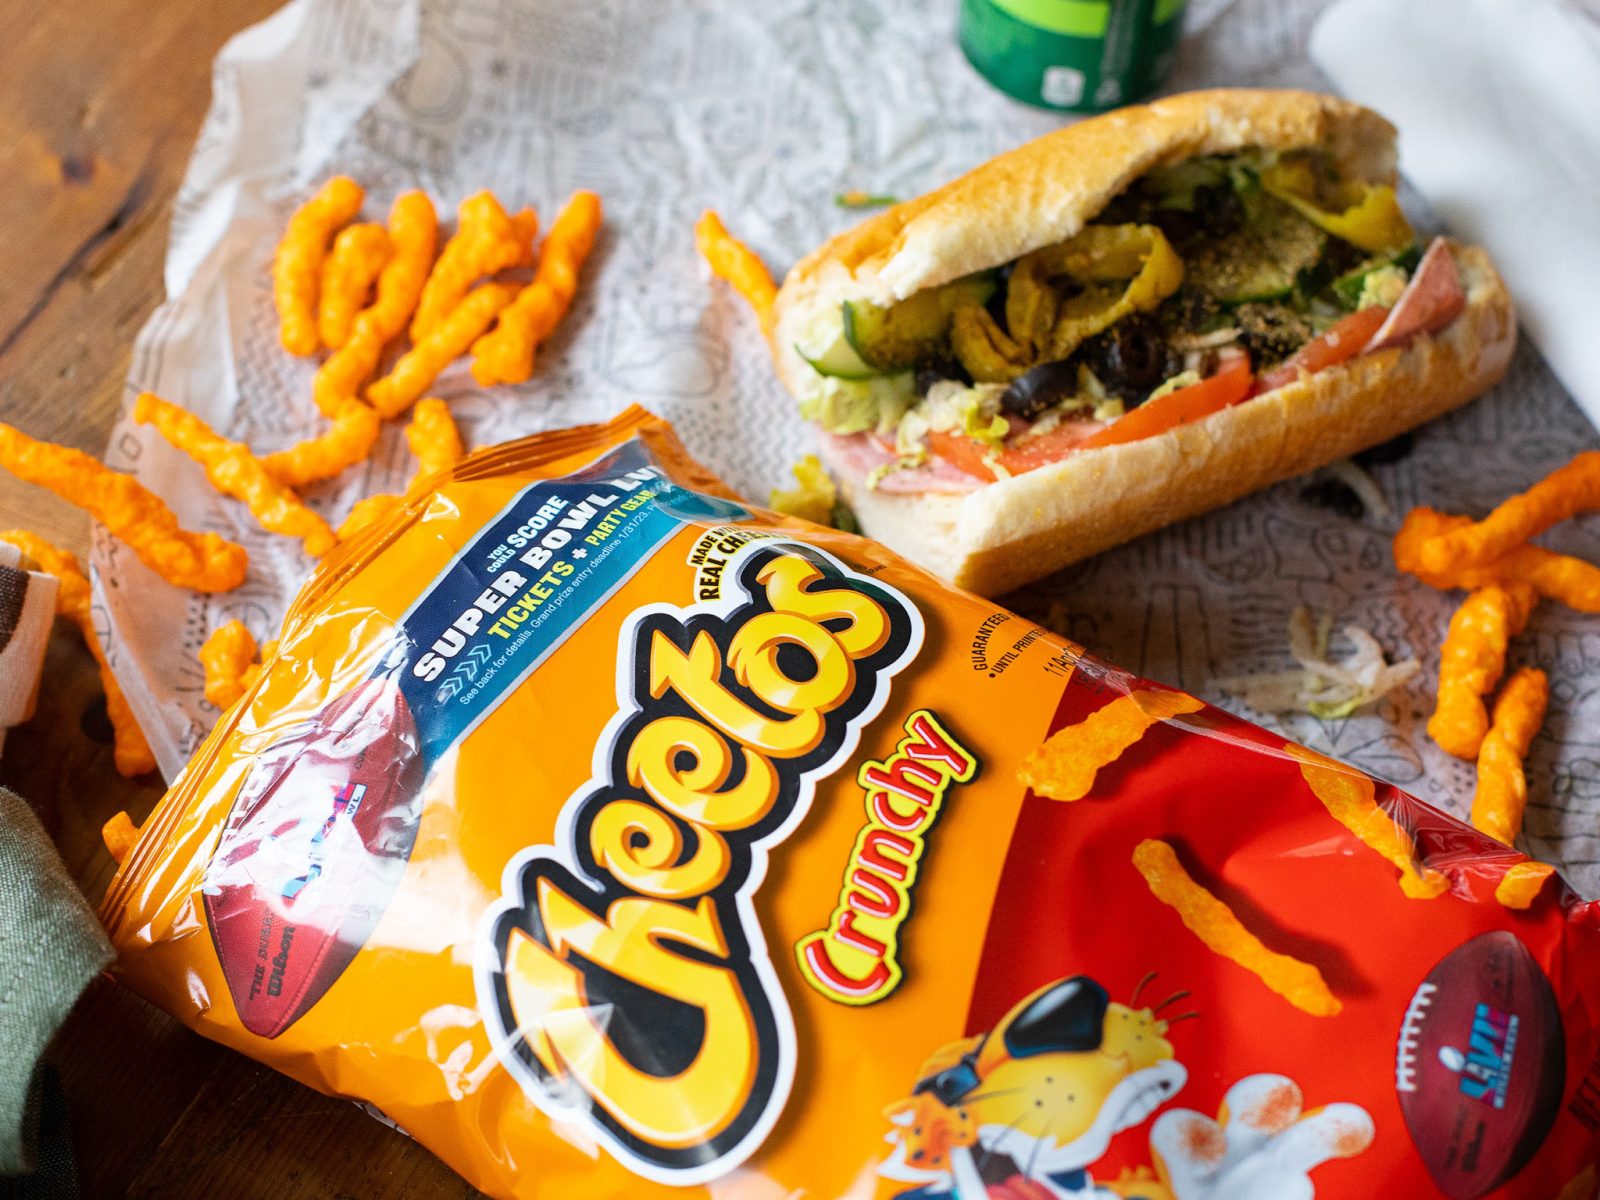 Get Cheetos As Low As $1.79 Per Bag At Kroger